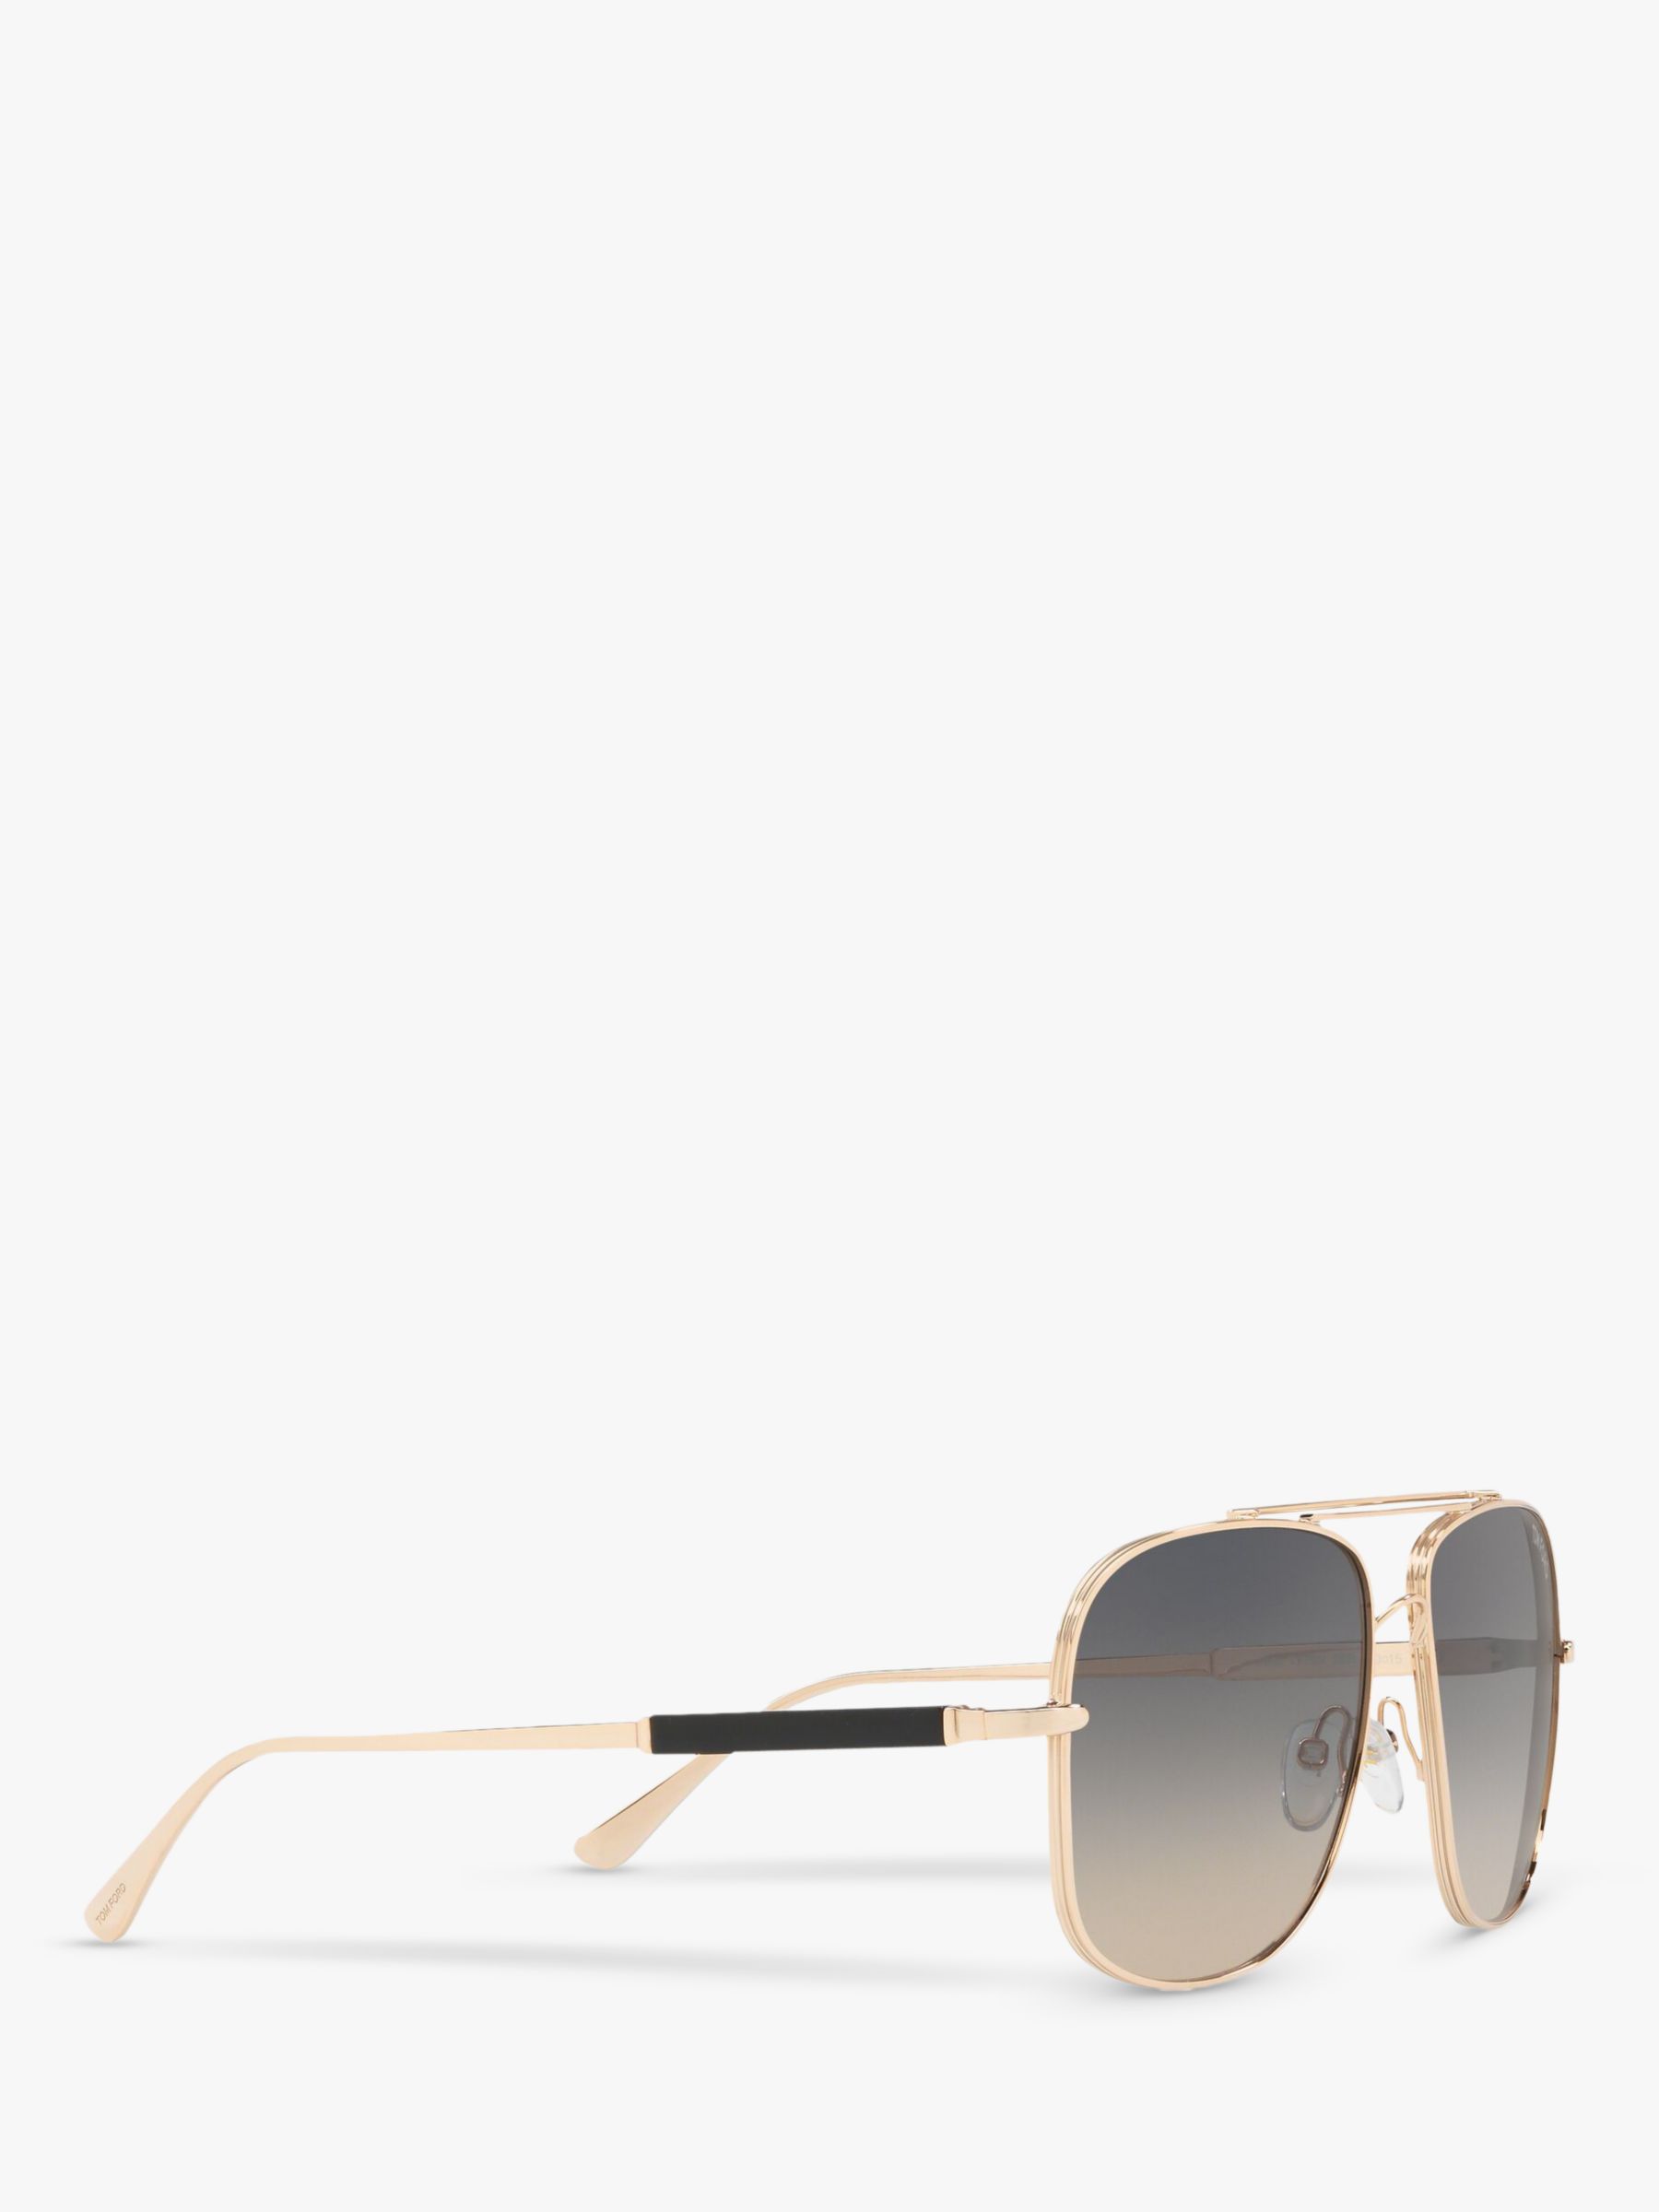 TOM FT0669 Men's Sunglasses, Gold/Grey Gradient John Lewis & Partners